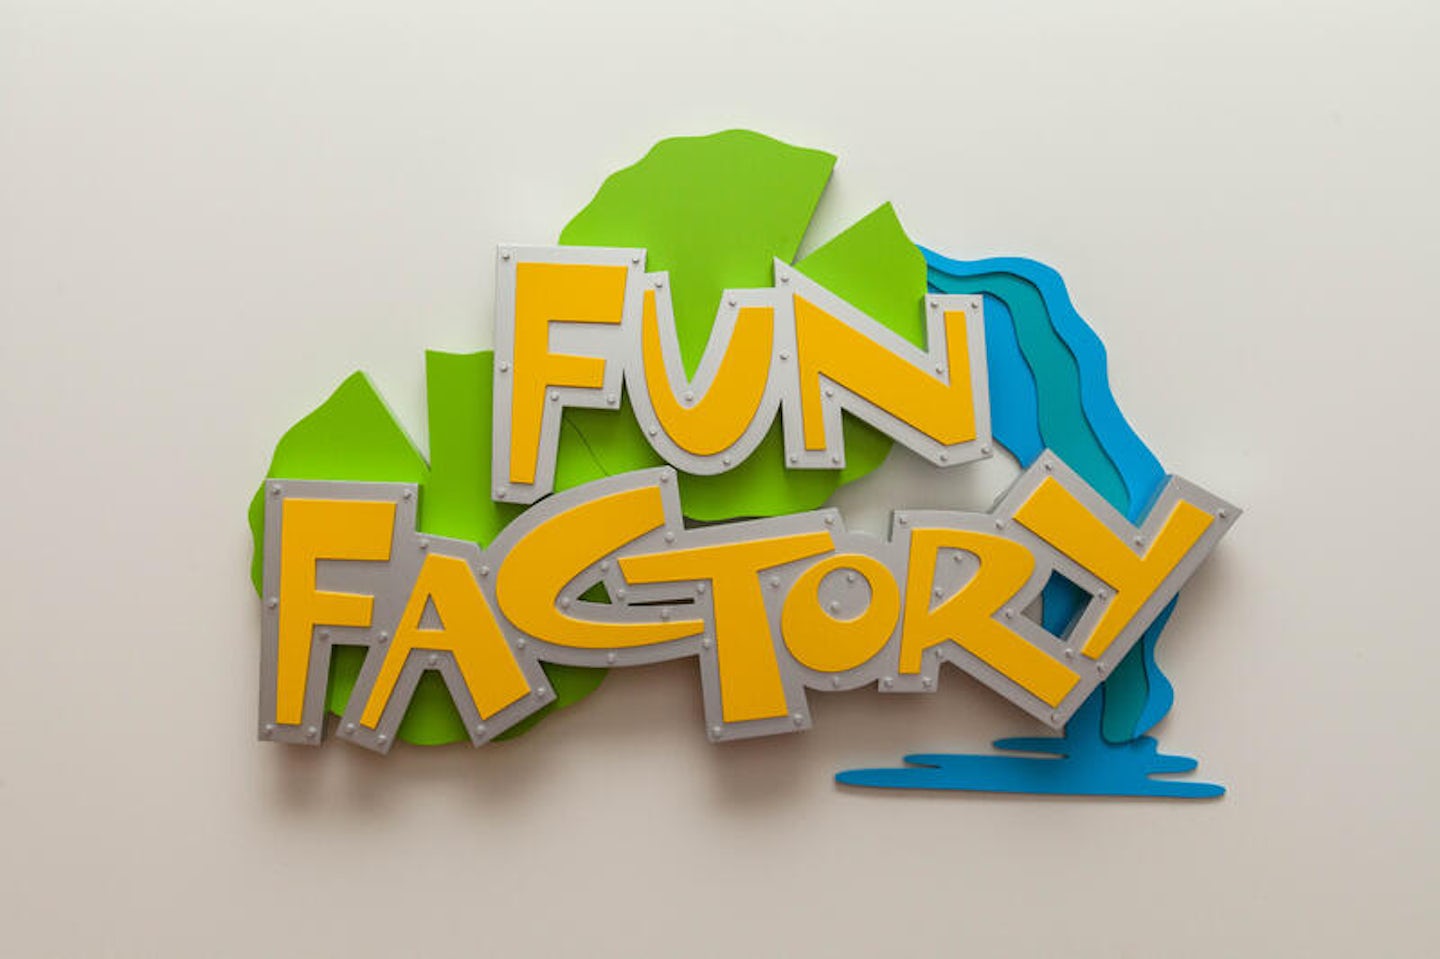 Fun Factory on Celebrity Constellation